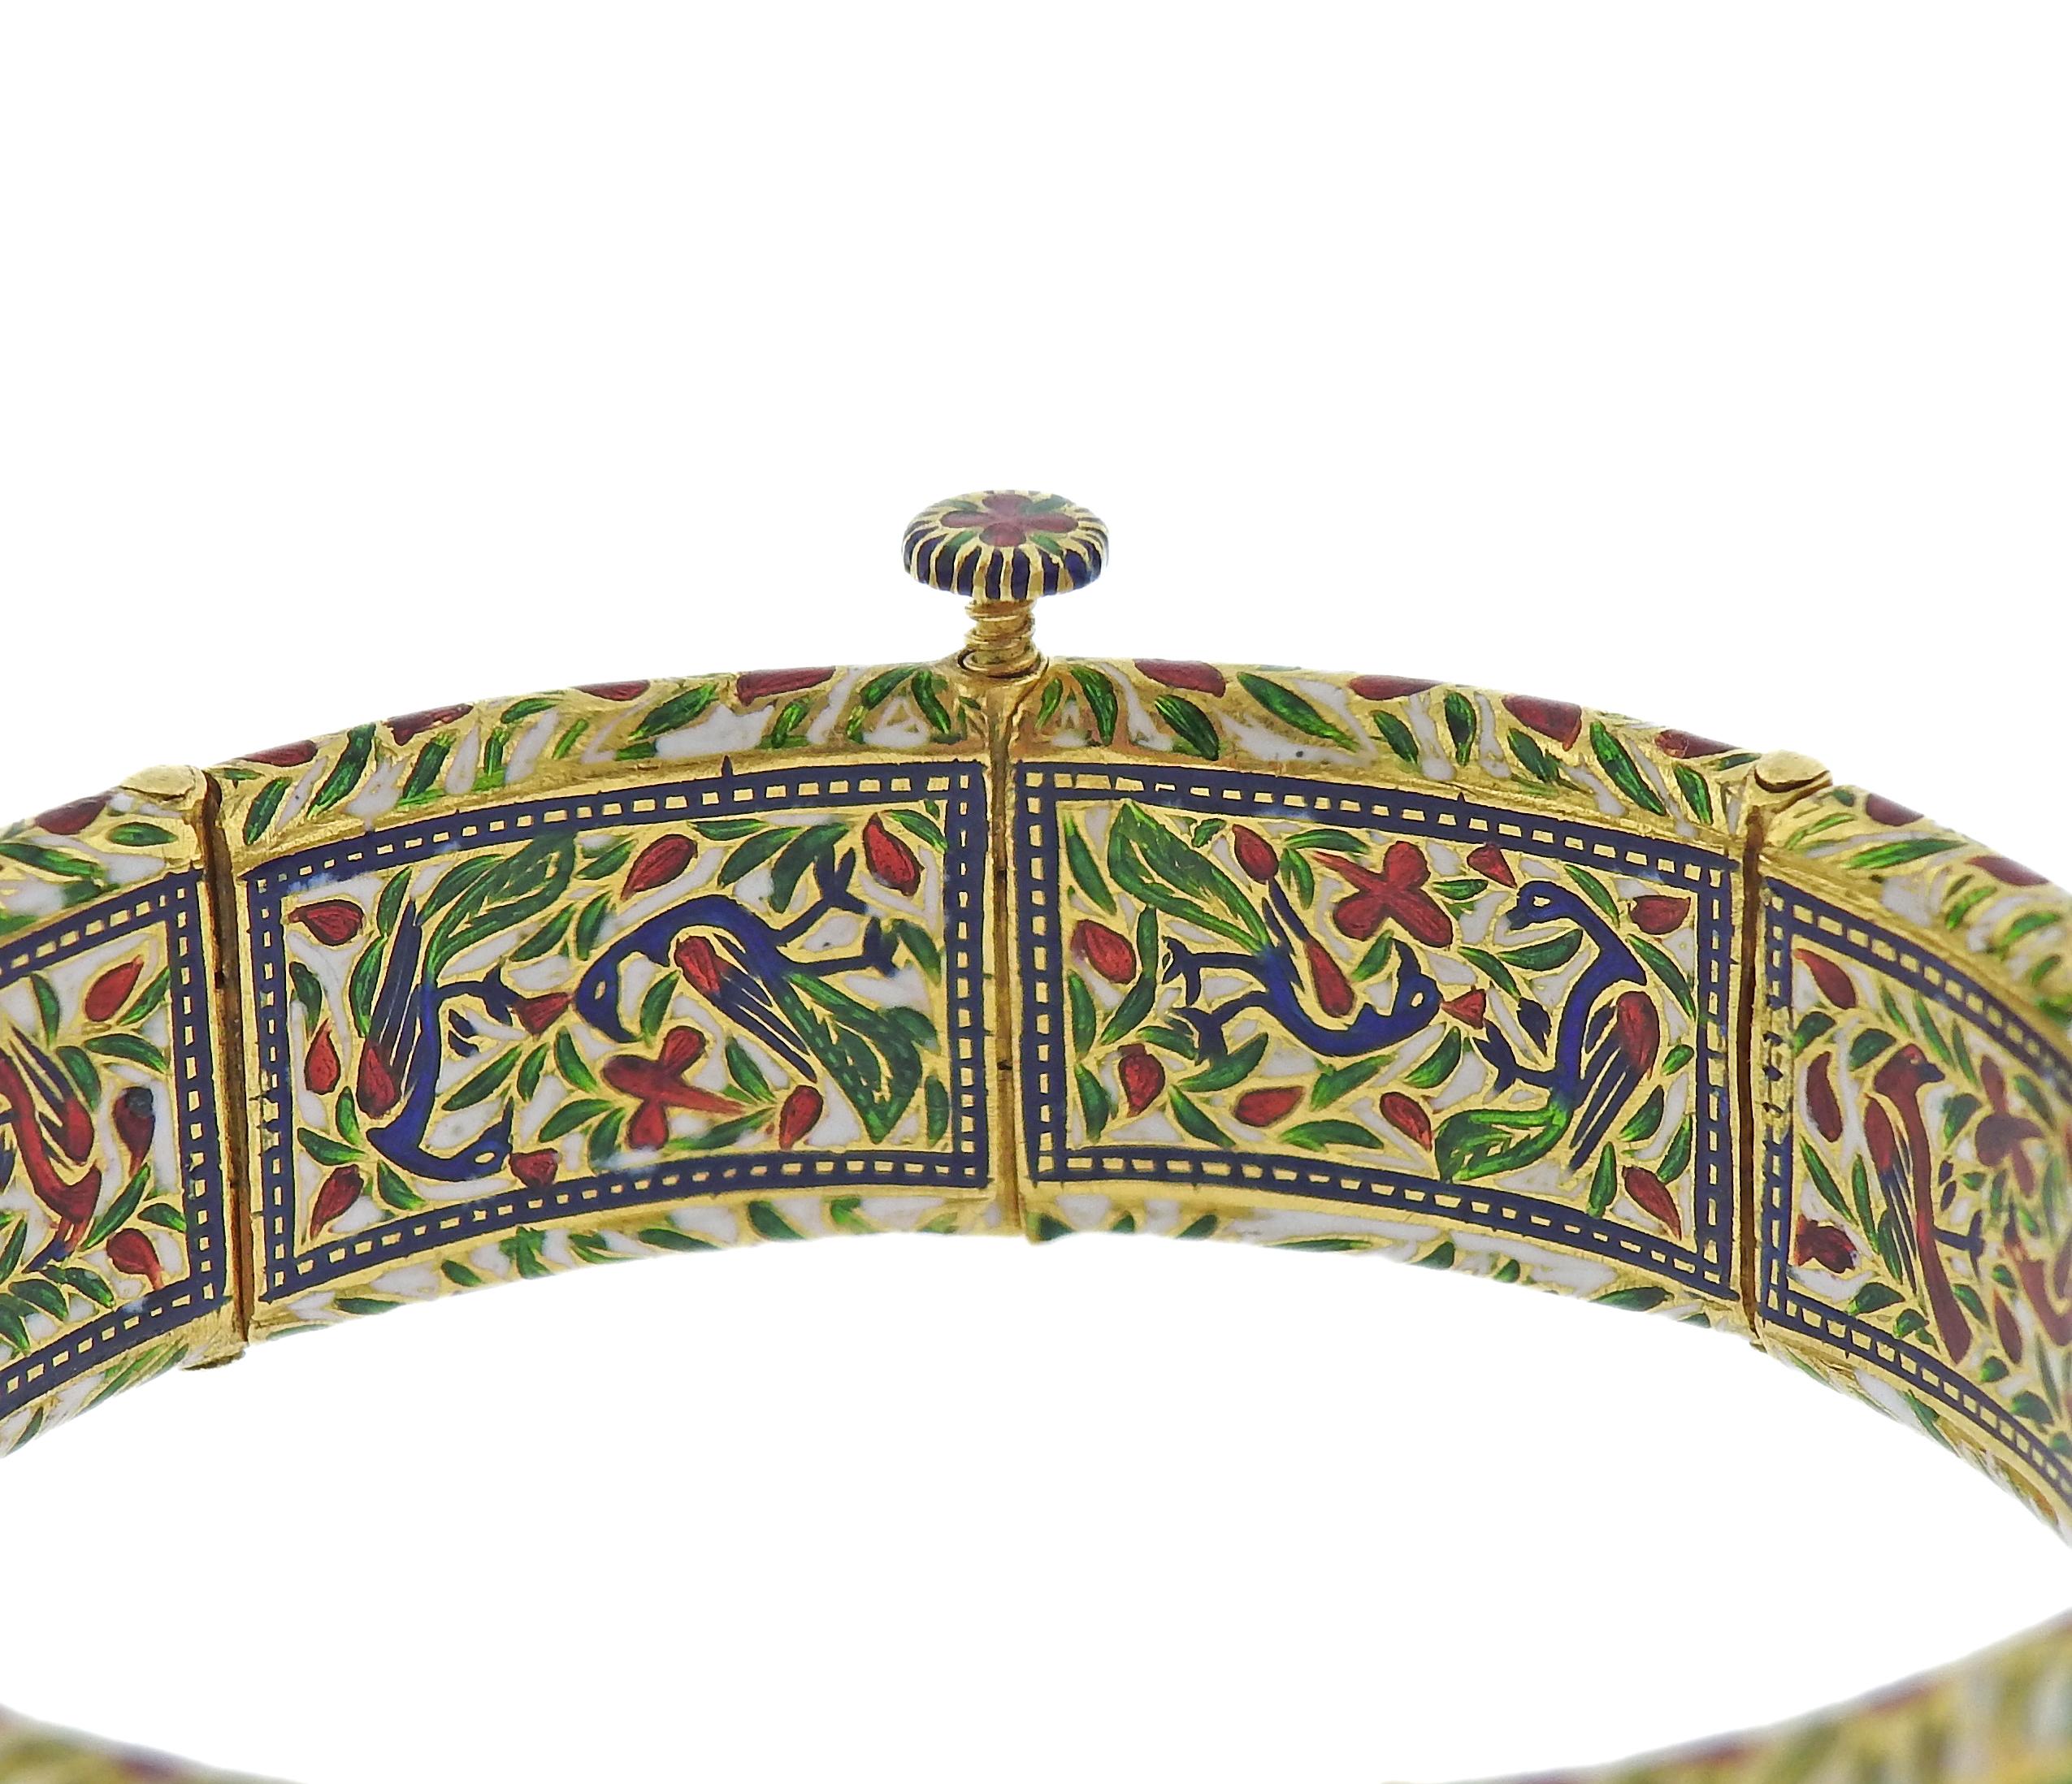 Antique Maharaja Indian bracelet, 22k gold, adorned with rose cut diamonds, rubies and enamel. Bracelet is 7